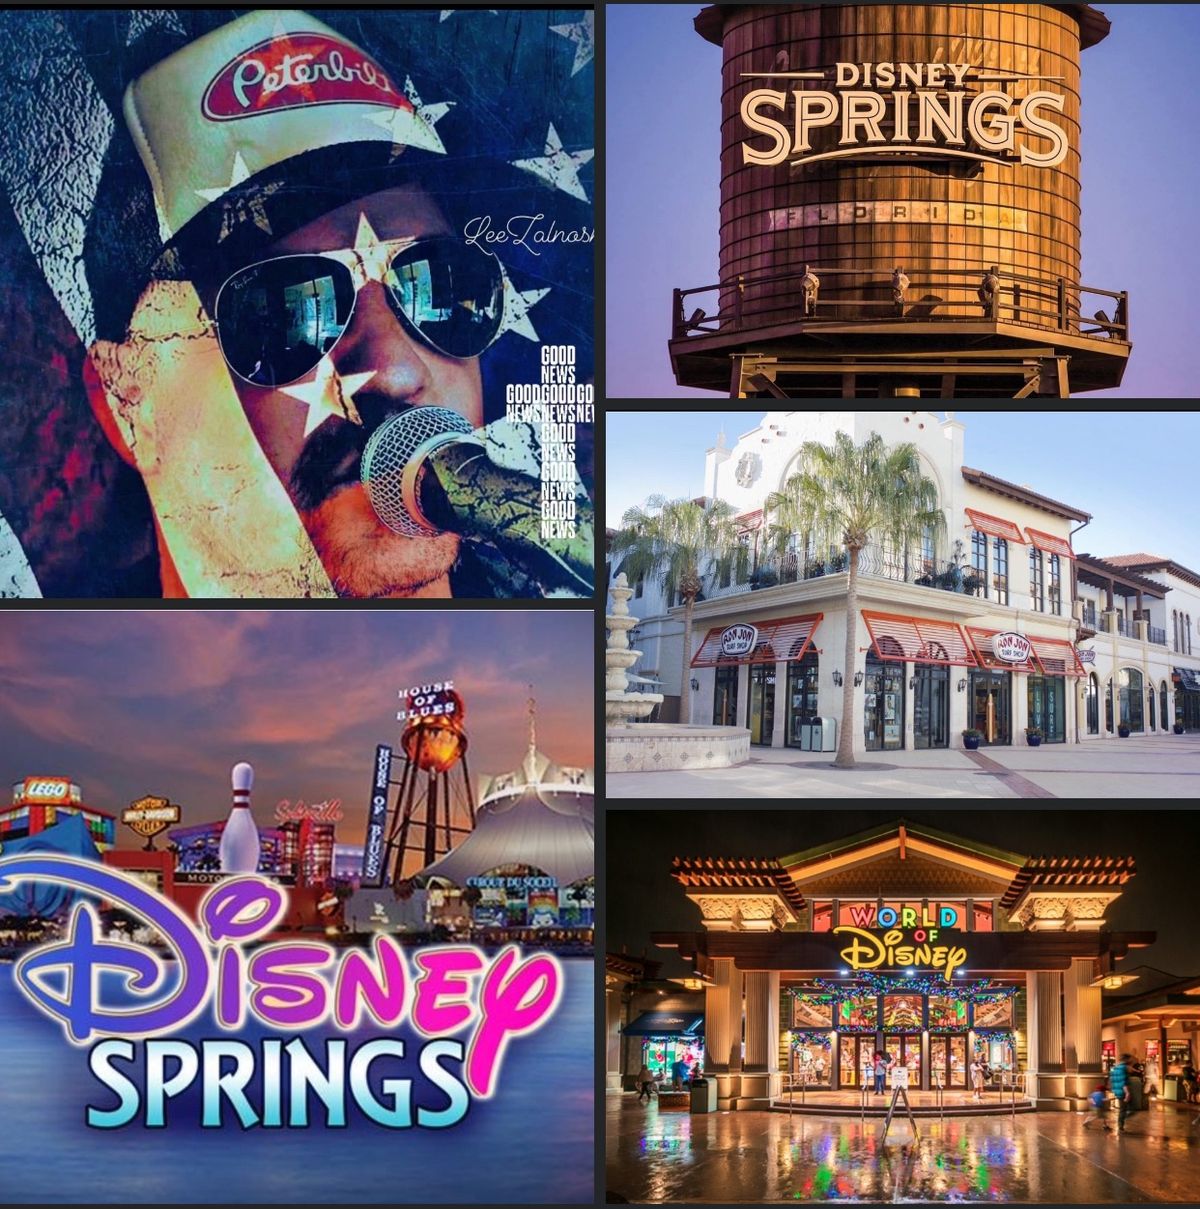 Lee Zalnoski live @ Disney Springs Orlando Florida Ron MEMORIAL DAY Jon\u2019s Surf Shop May 27th 12-4pm